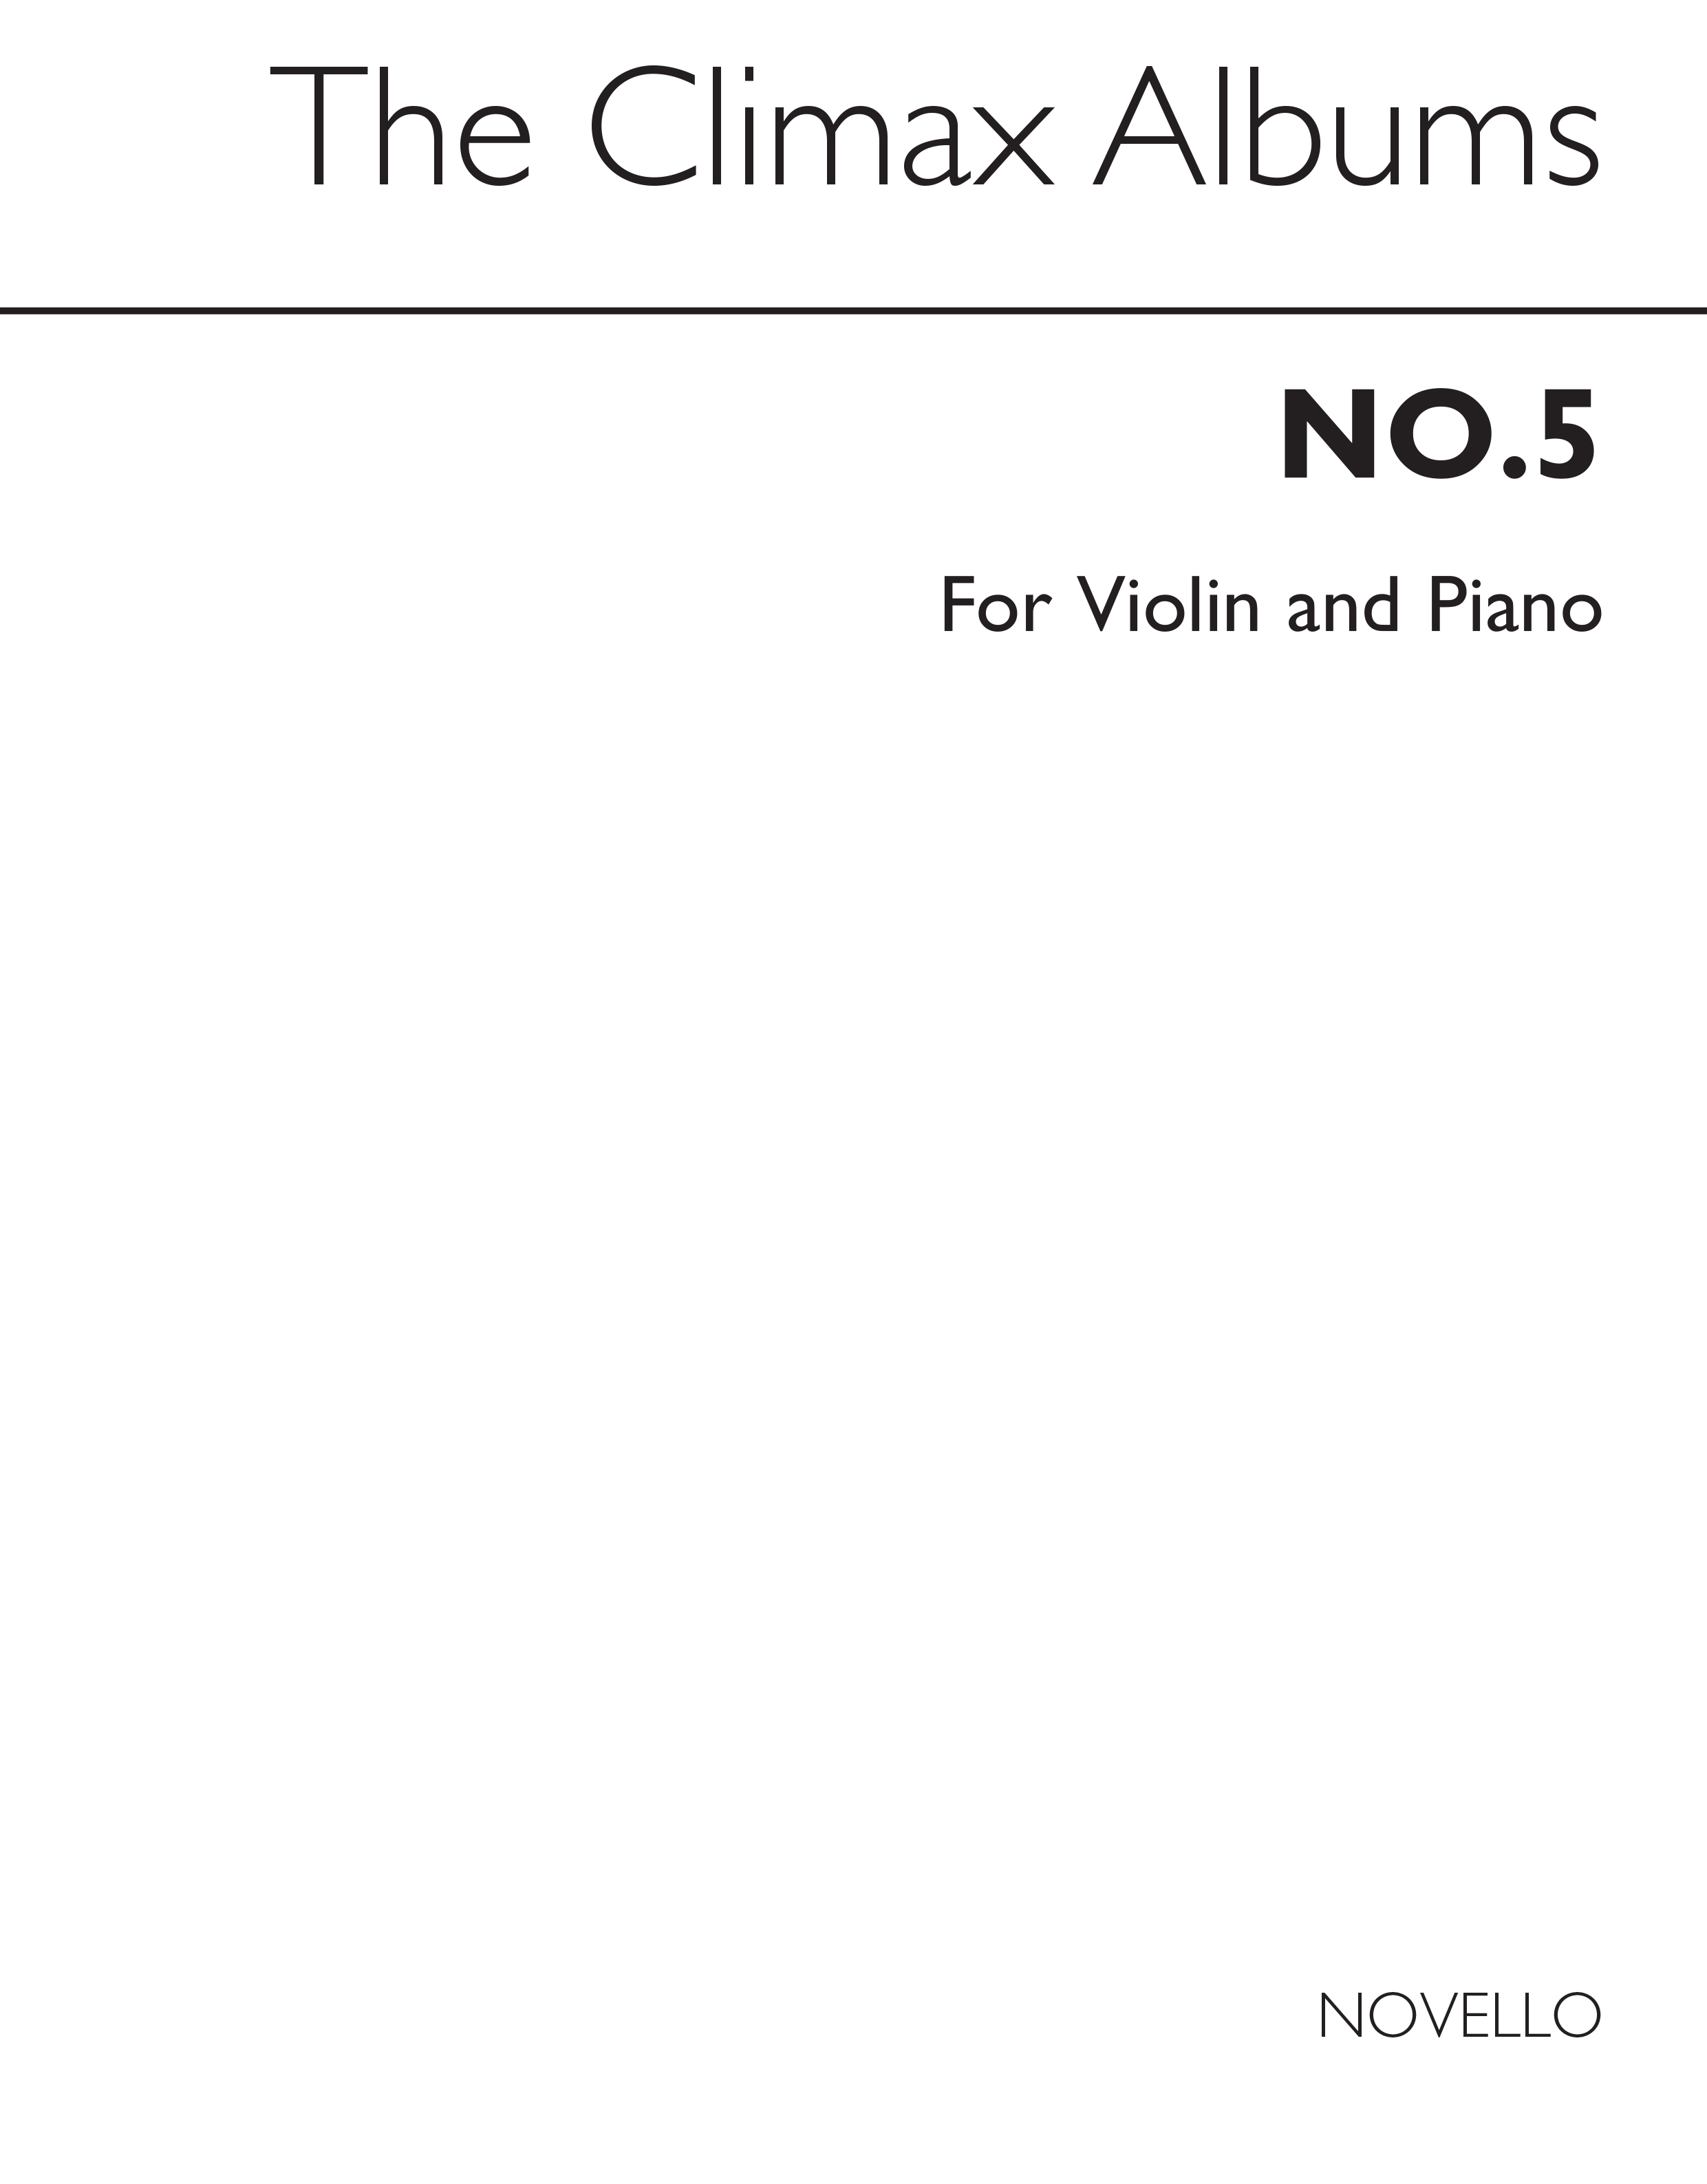 The Climax Album No. 5 For Violin And Piano: Violin: Parts